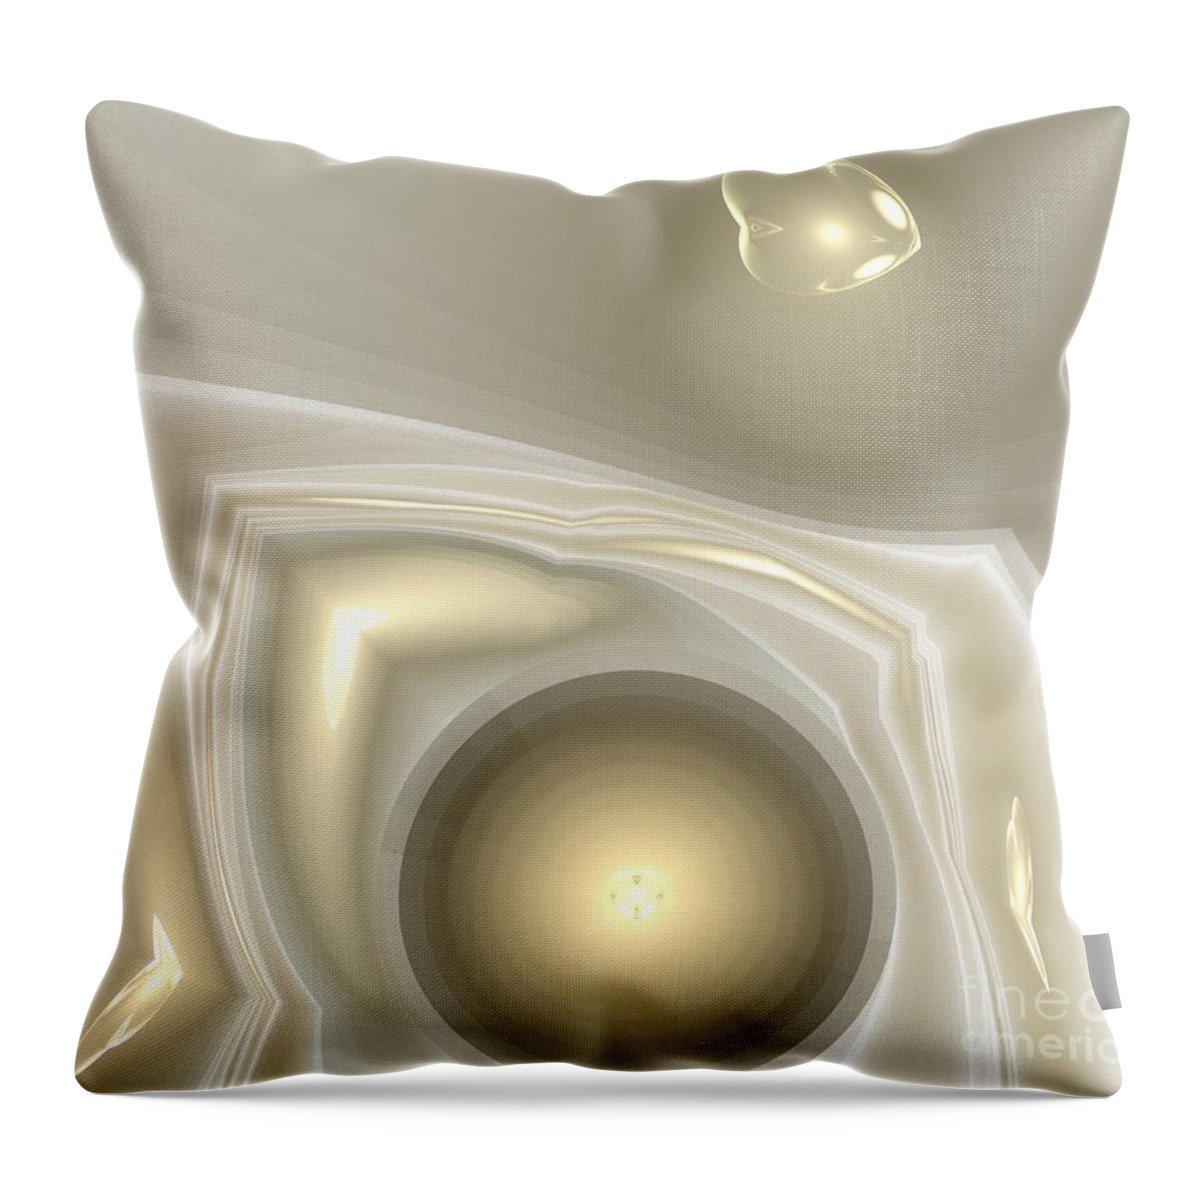 Apophysis Throw Pillow featuring the digital art Gold Rock by Kim Sy Ok